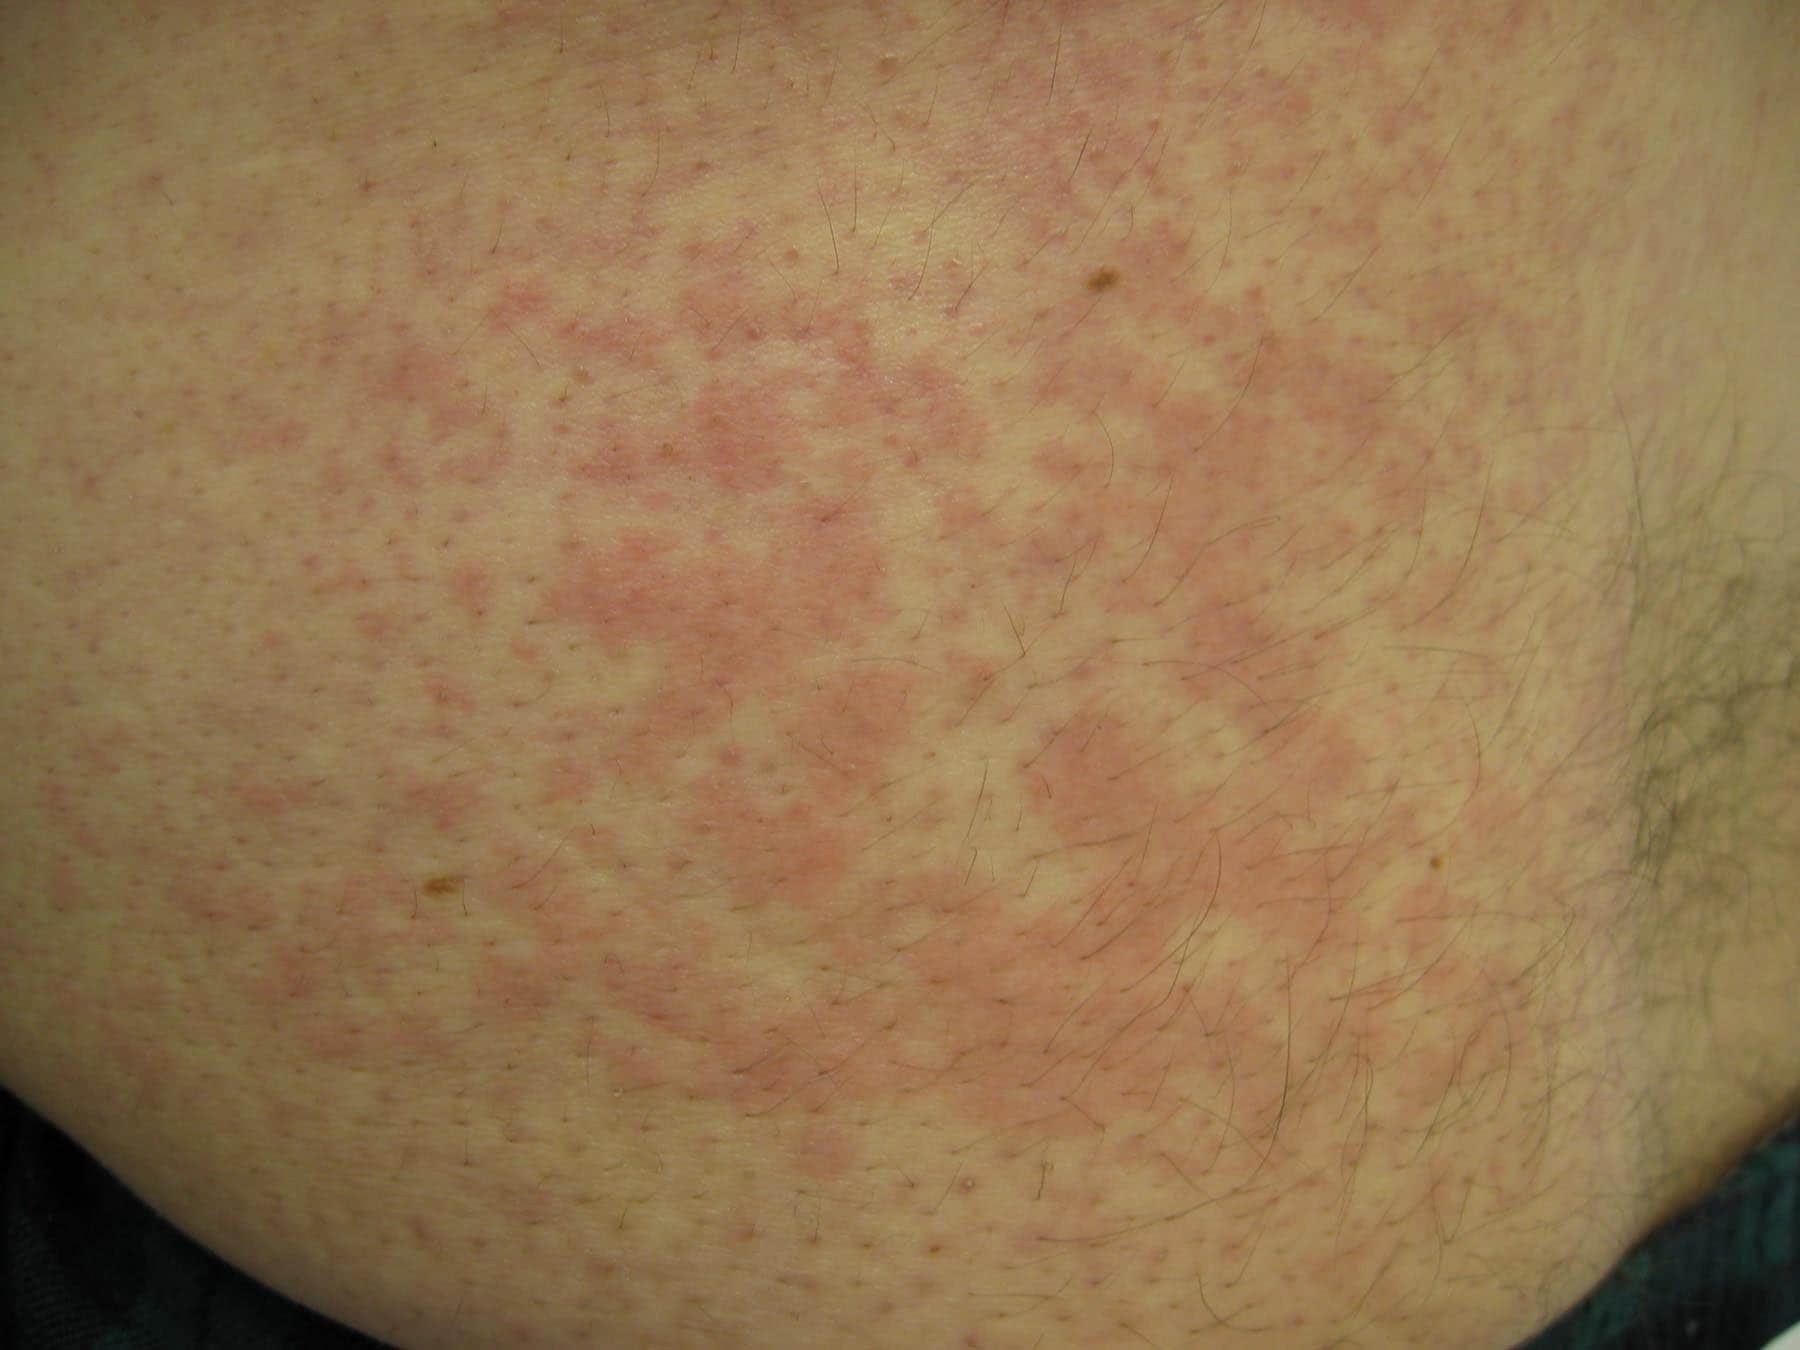 Dust Mite Allergy Symptoms Rash